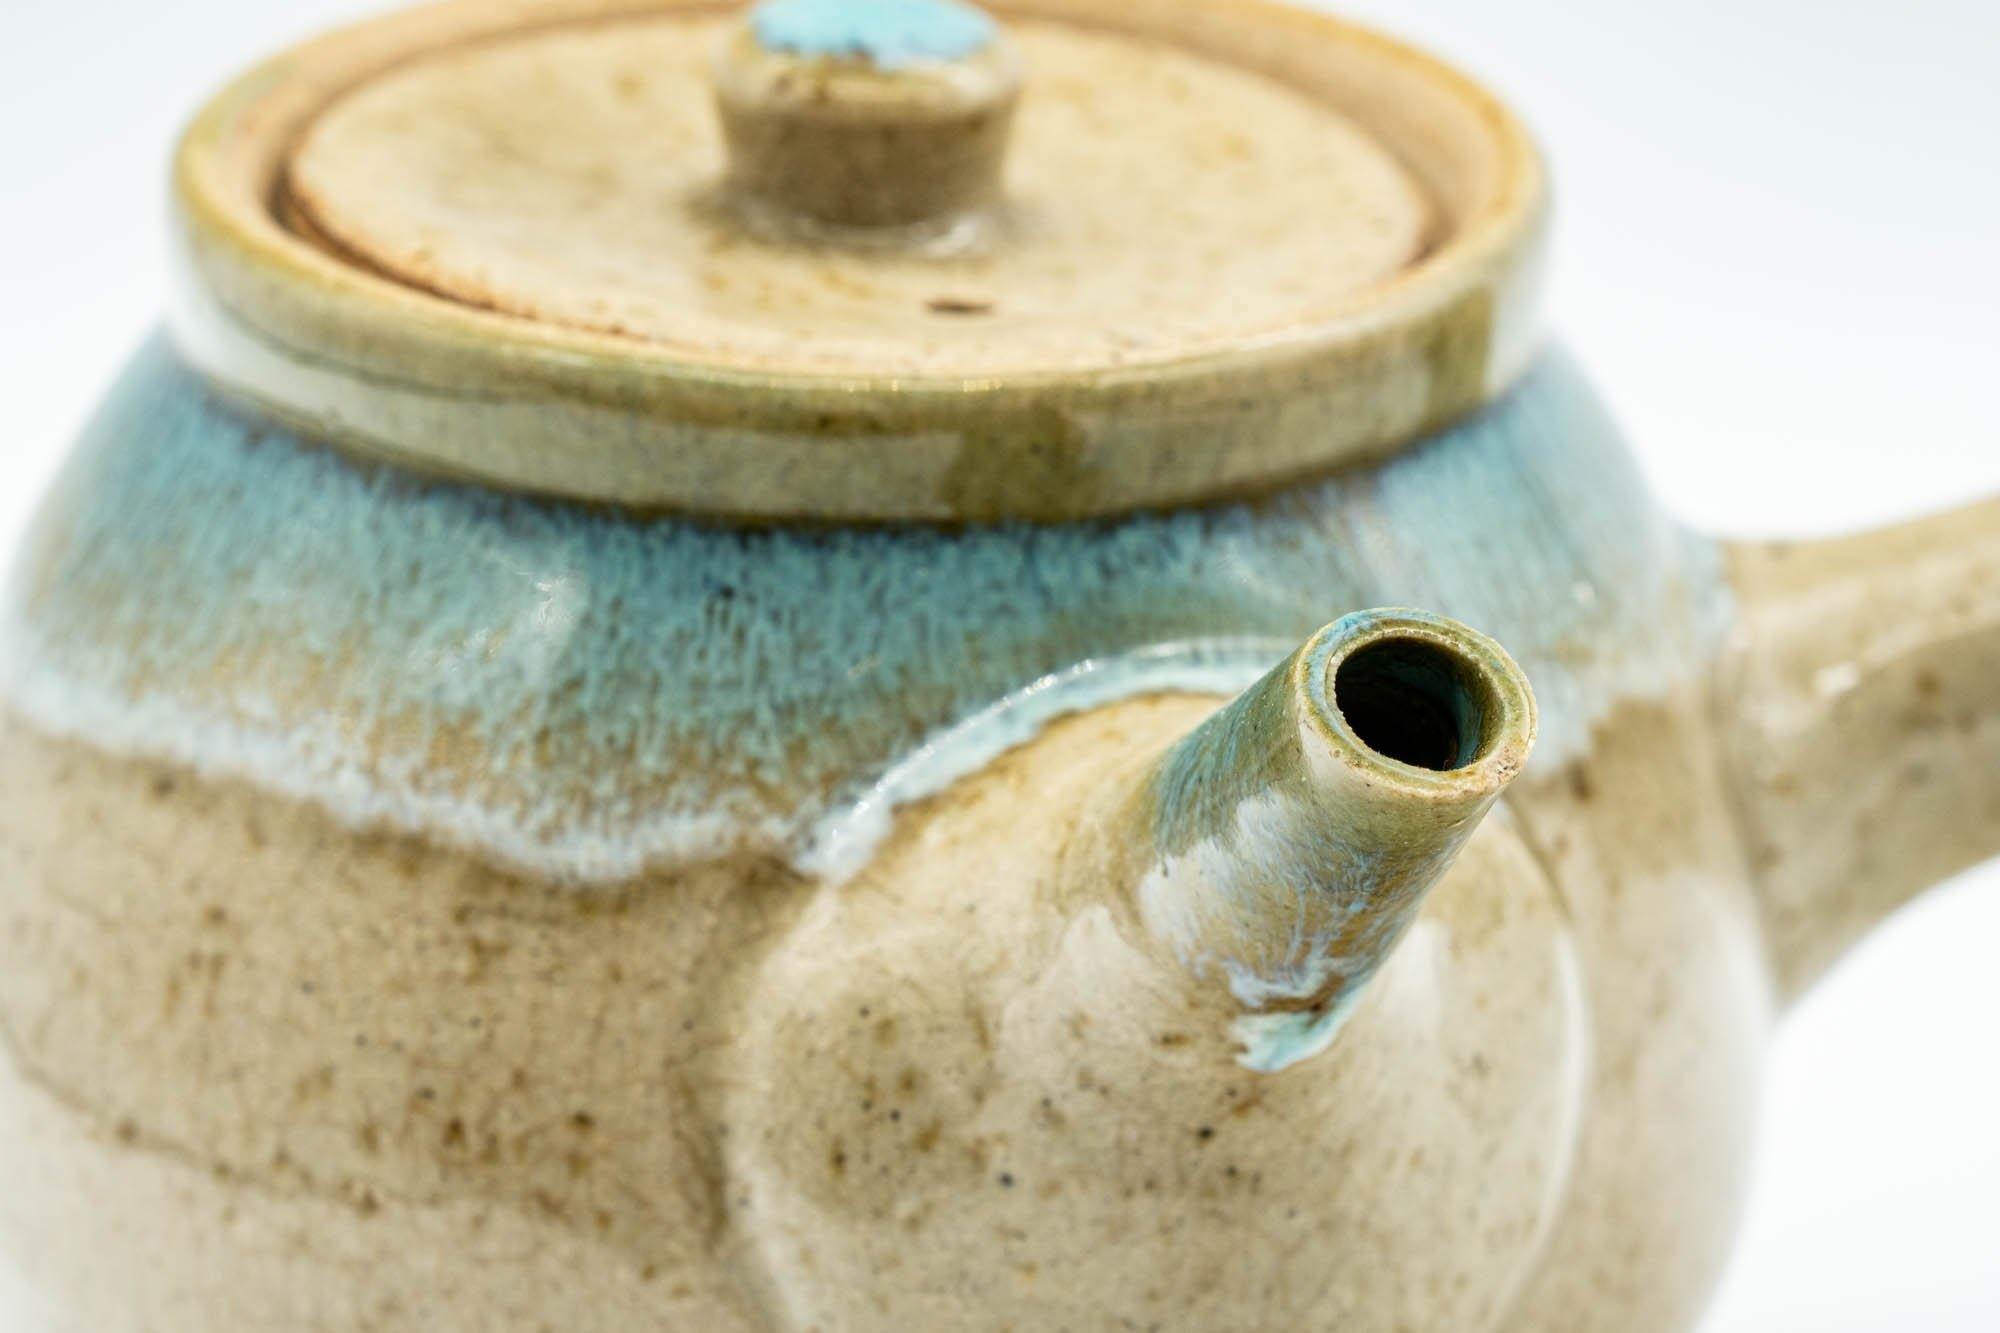 Japanese Kyusu - 上野焼 Turquoise Drip Glazed Agano-yaki Teapot - 325ml - Tezumi